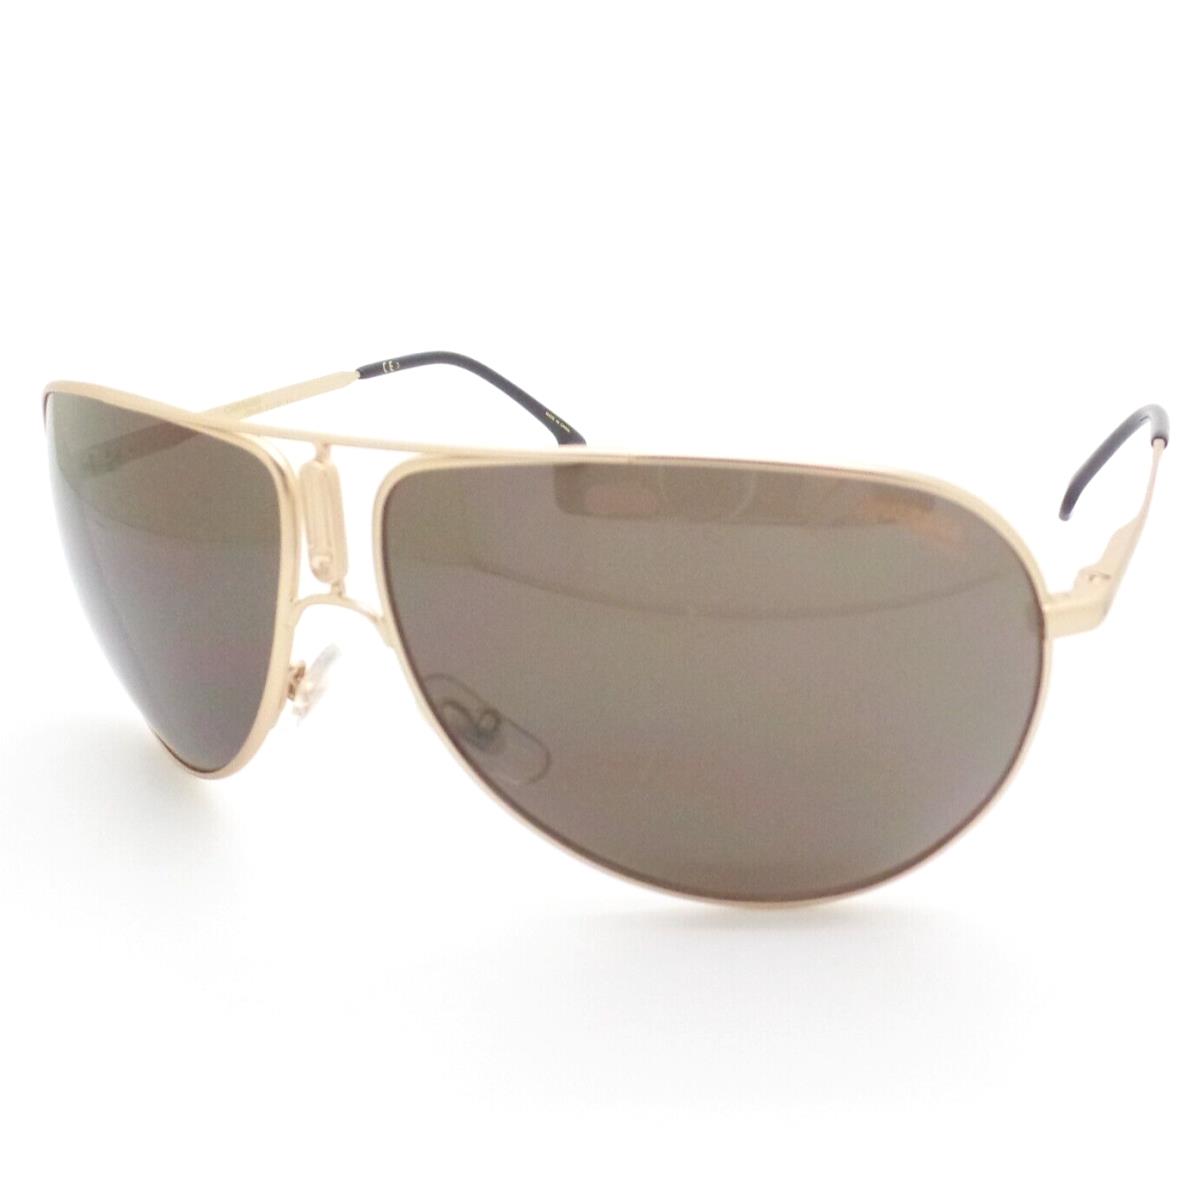 Carrera Gipsy 65 AOZ70 Matte Gold Brown Sunglasses - Frame: Matte Gold, Lens: Brown